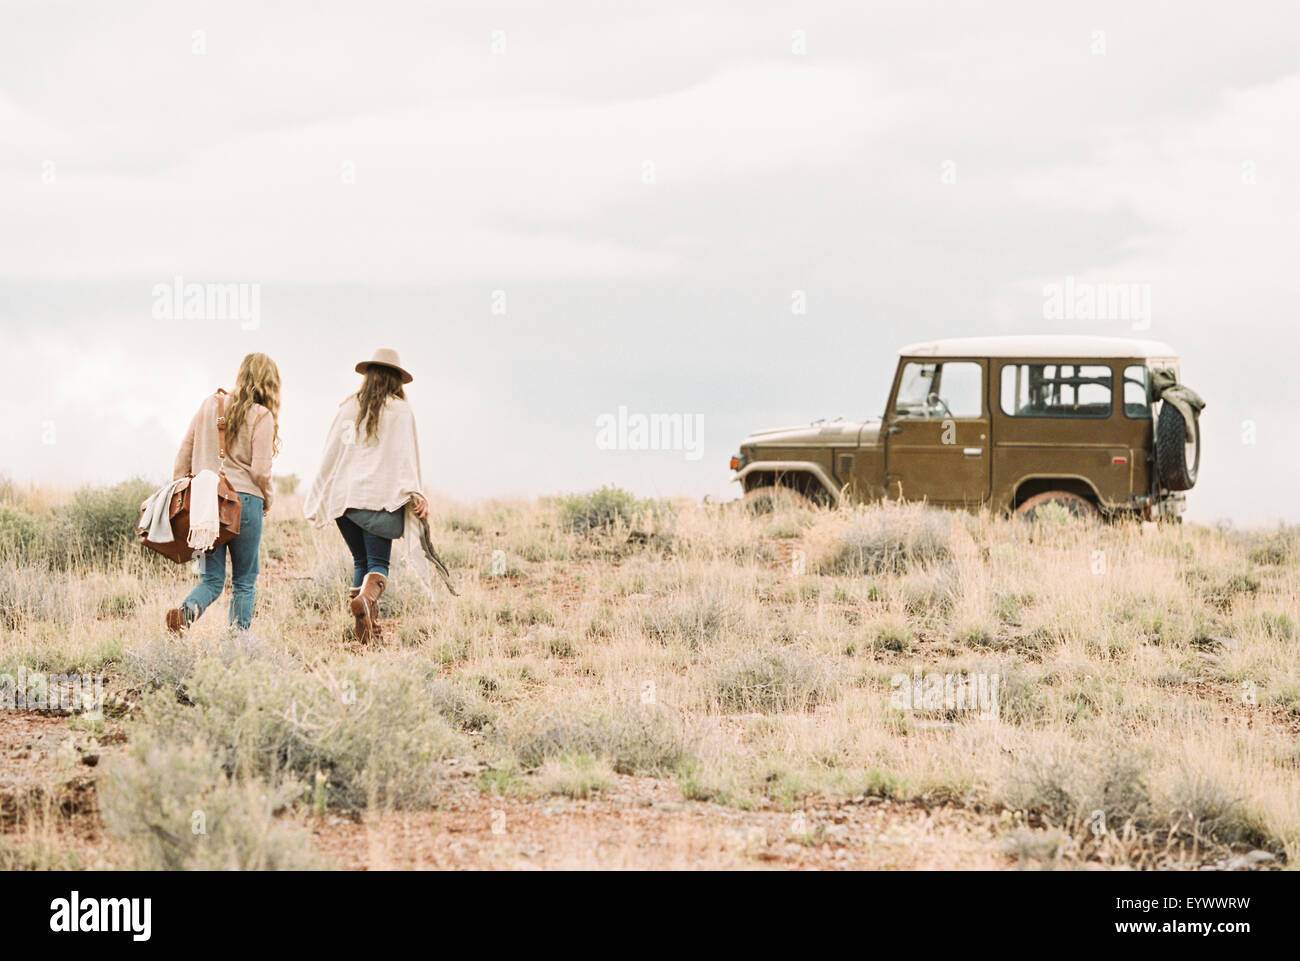 Two women walking towards 4x4 parked in a desert. Stock Photo